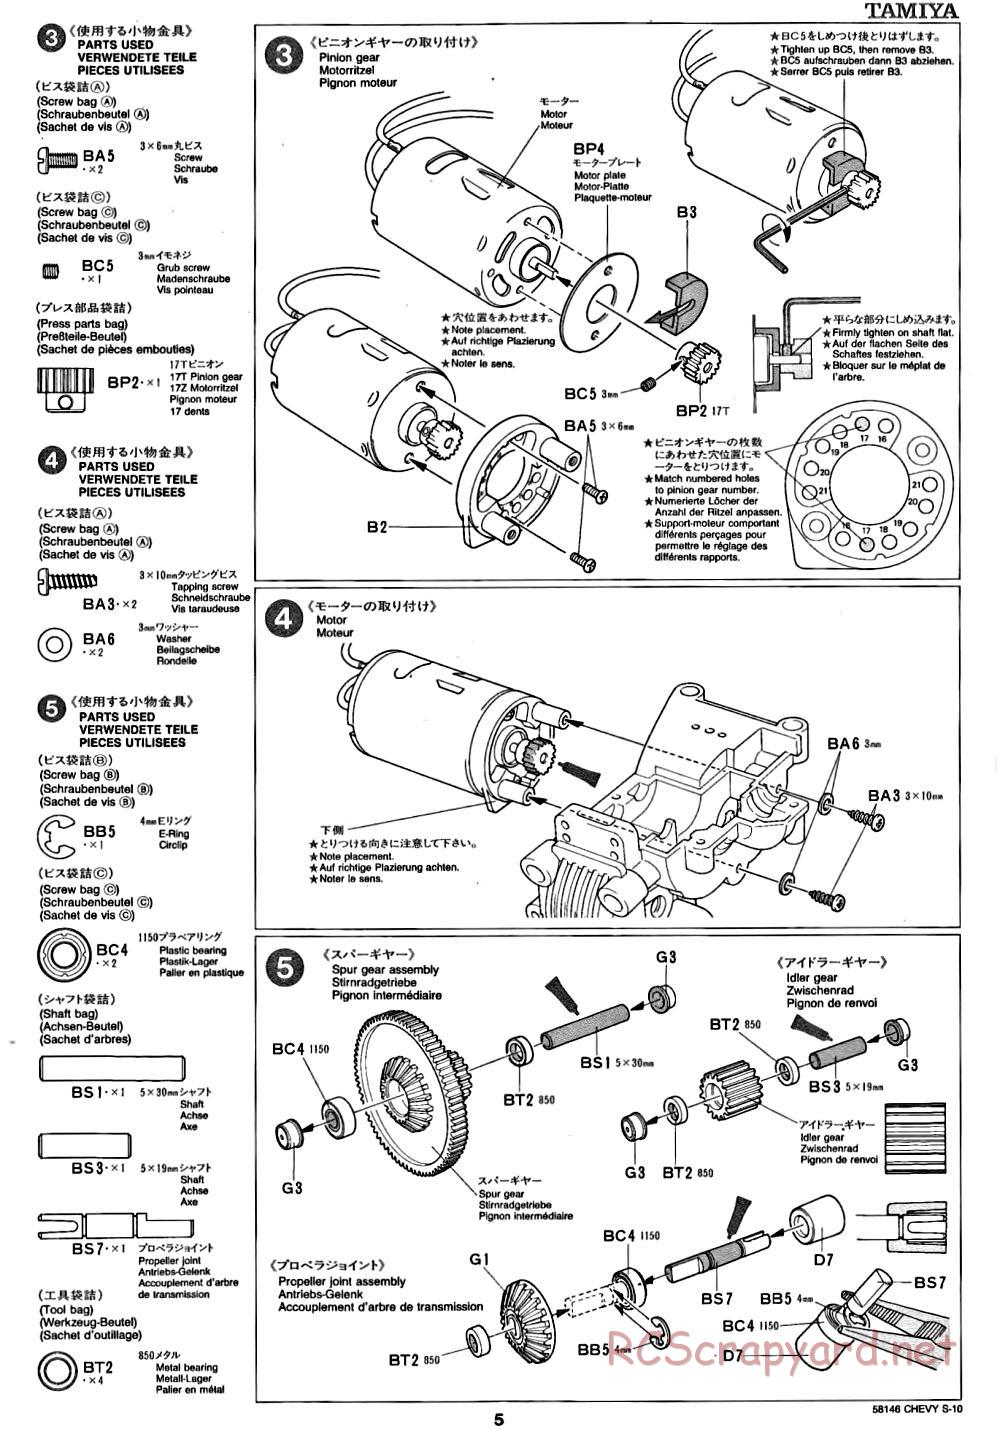 Tamiya - Chevy S-10 Chassis - Manual - Page 5